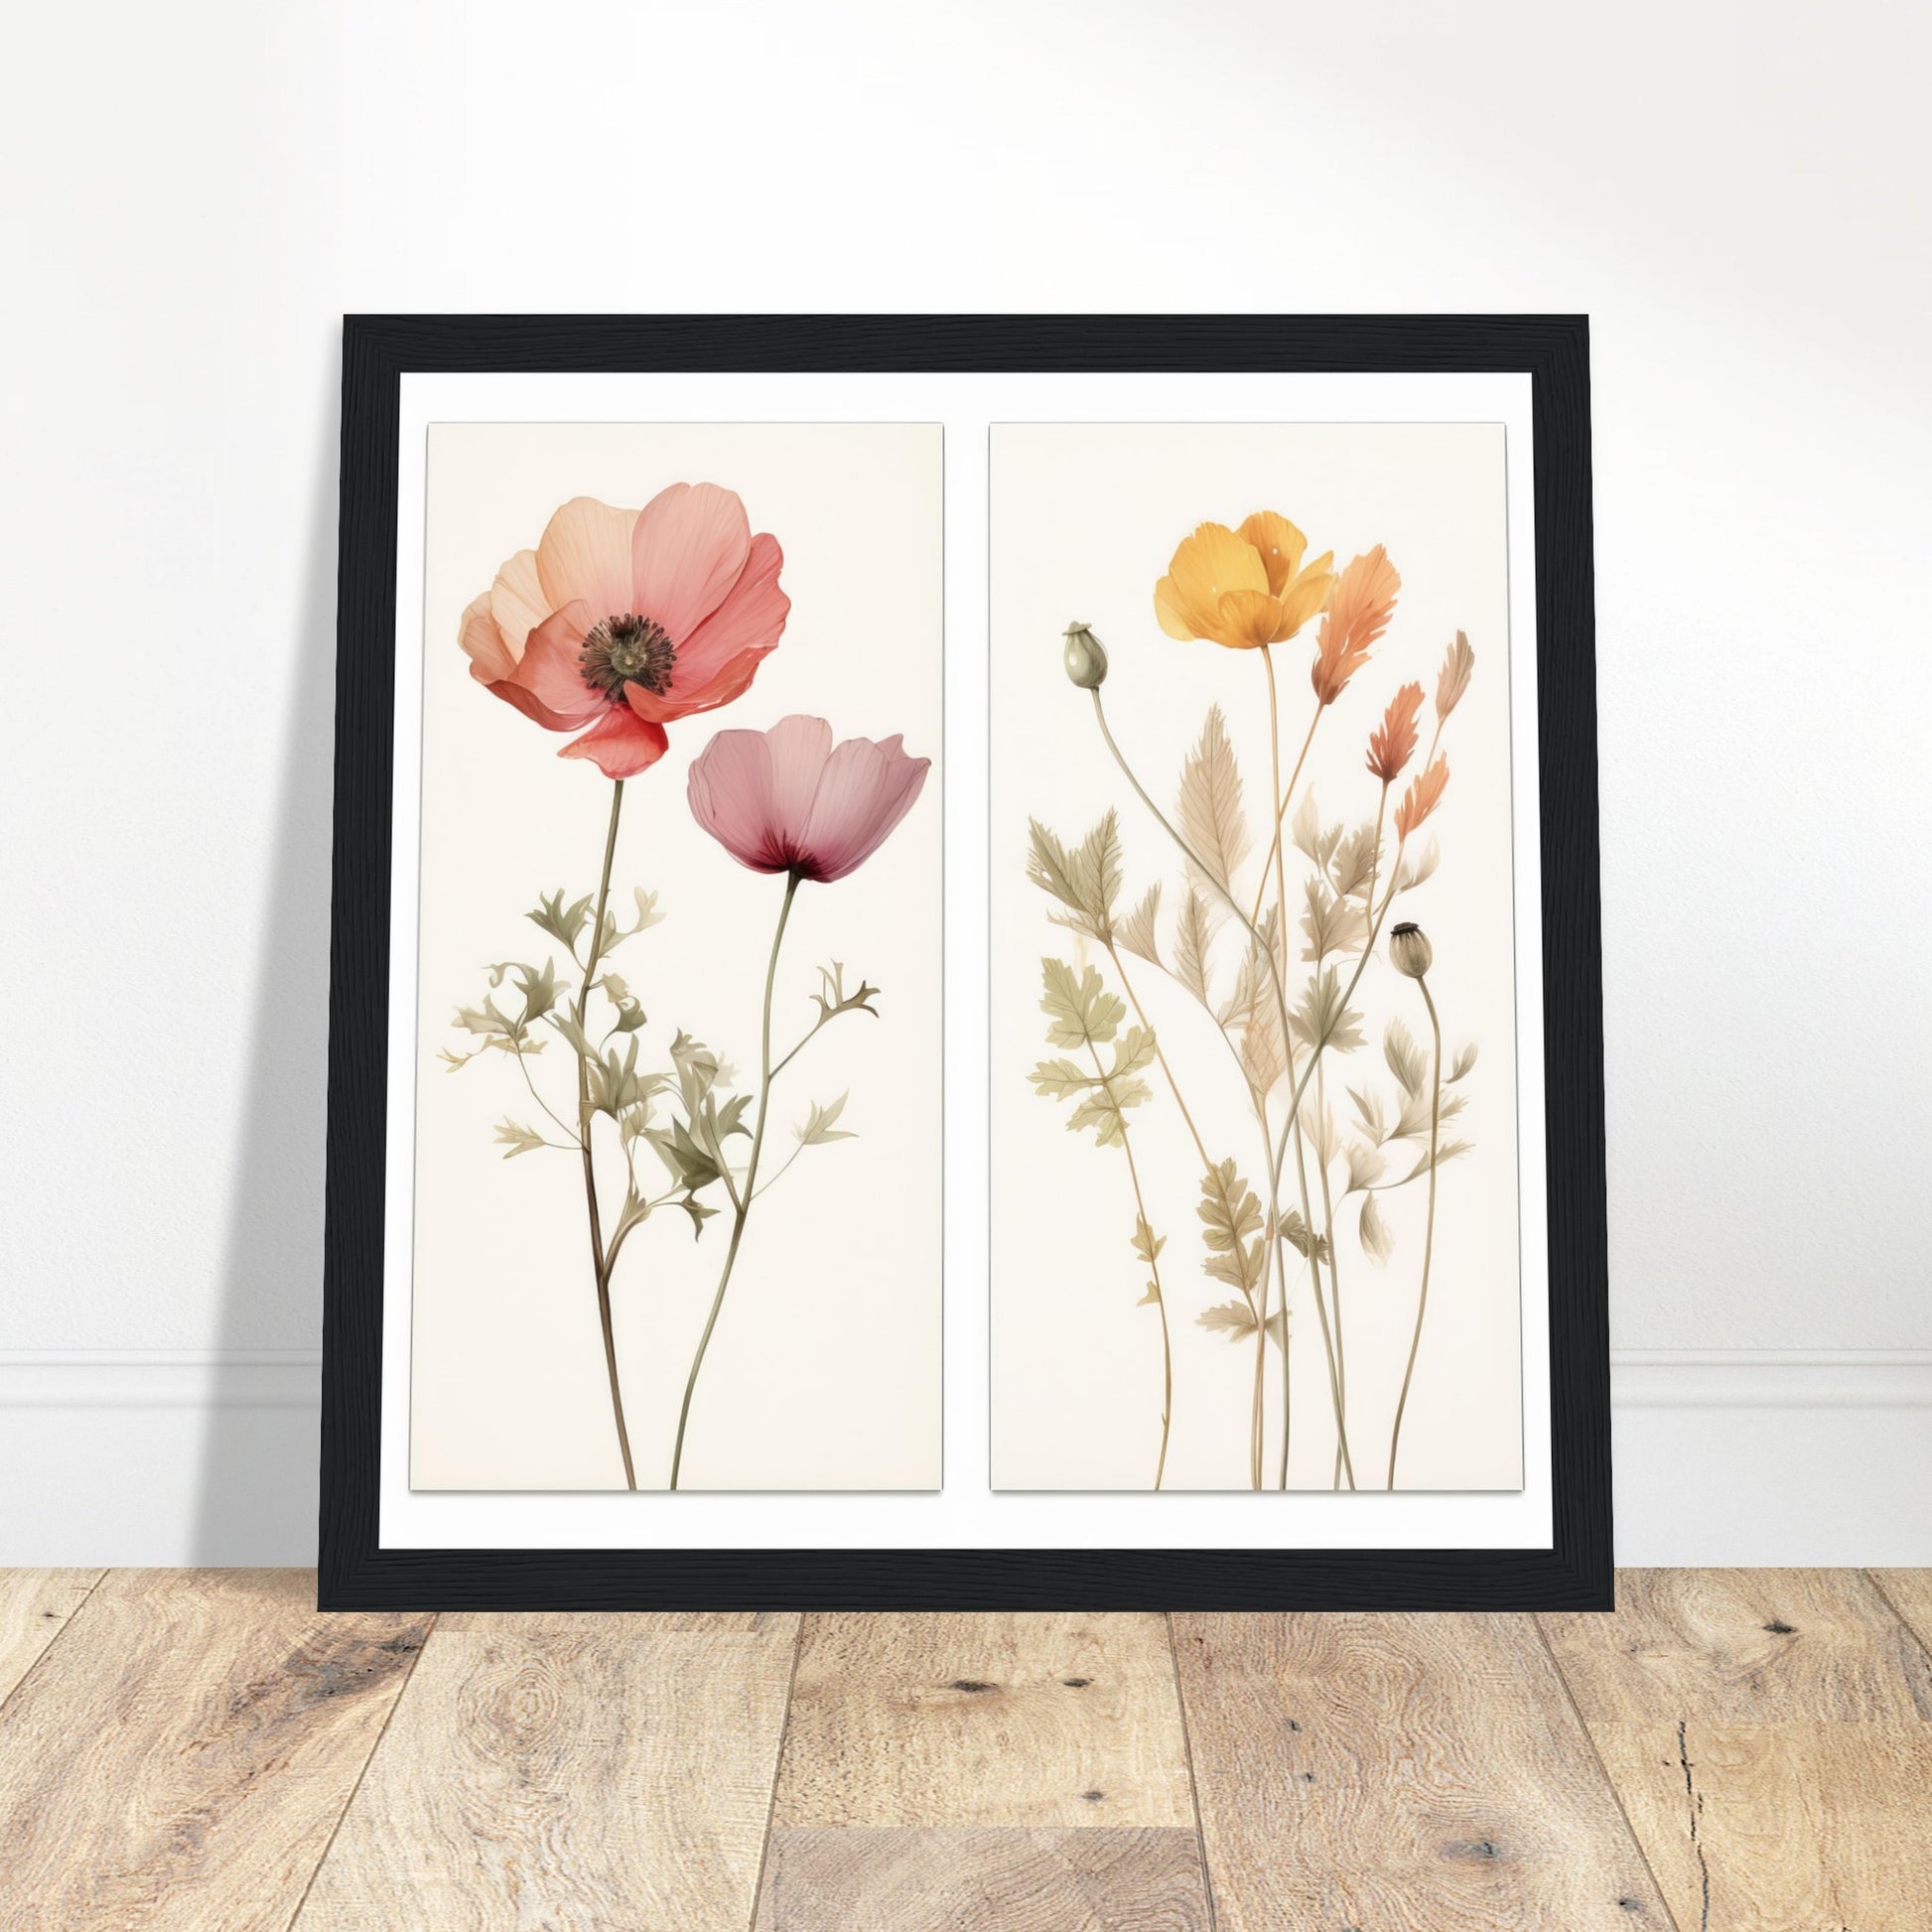 Elegance - Botanical Artwork #2- Print Room Ltd Black frame 30x30 cm / 12x12"